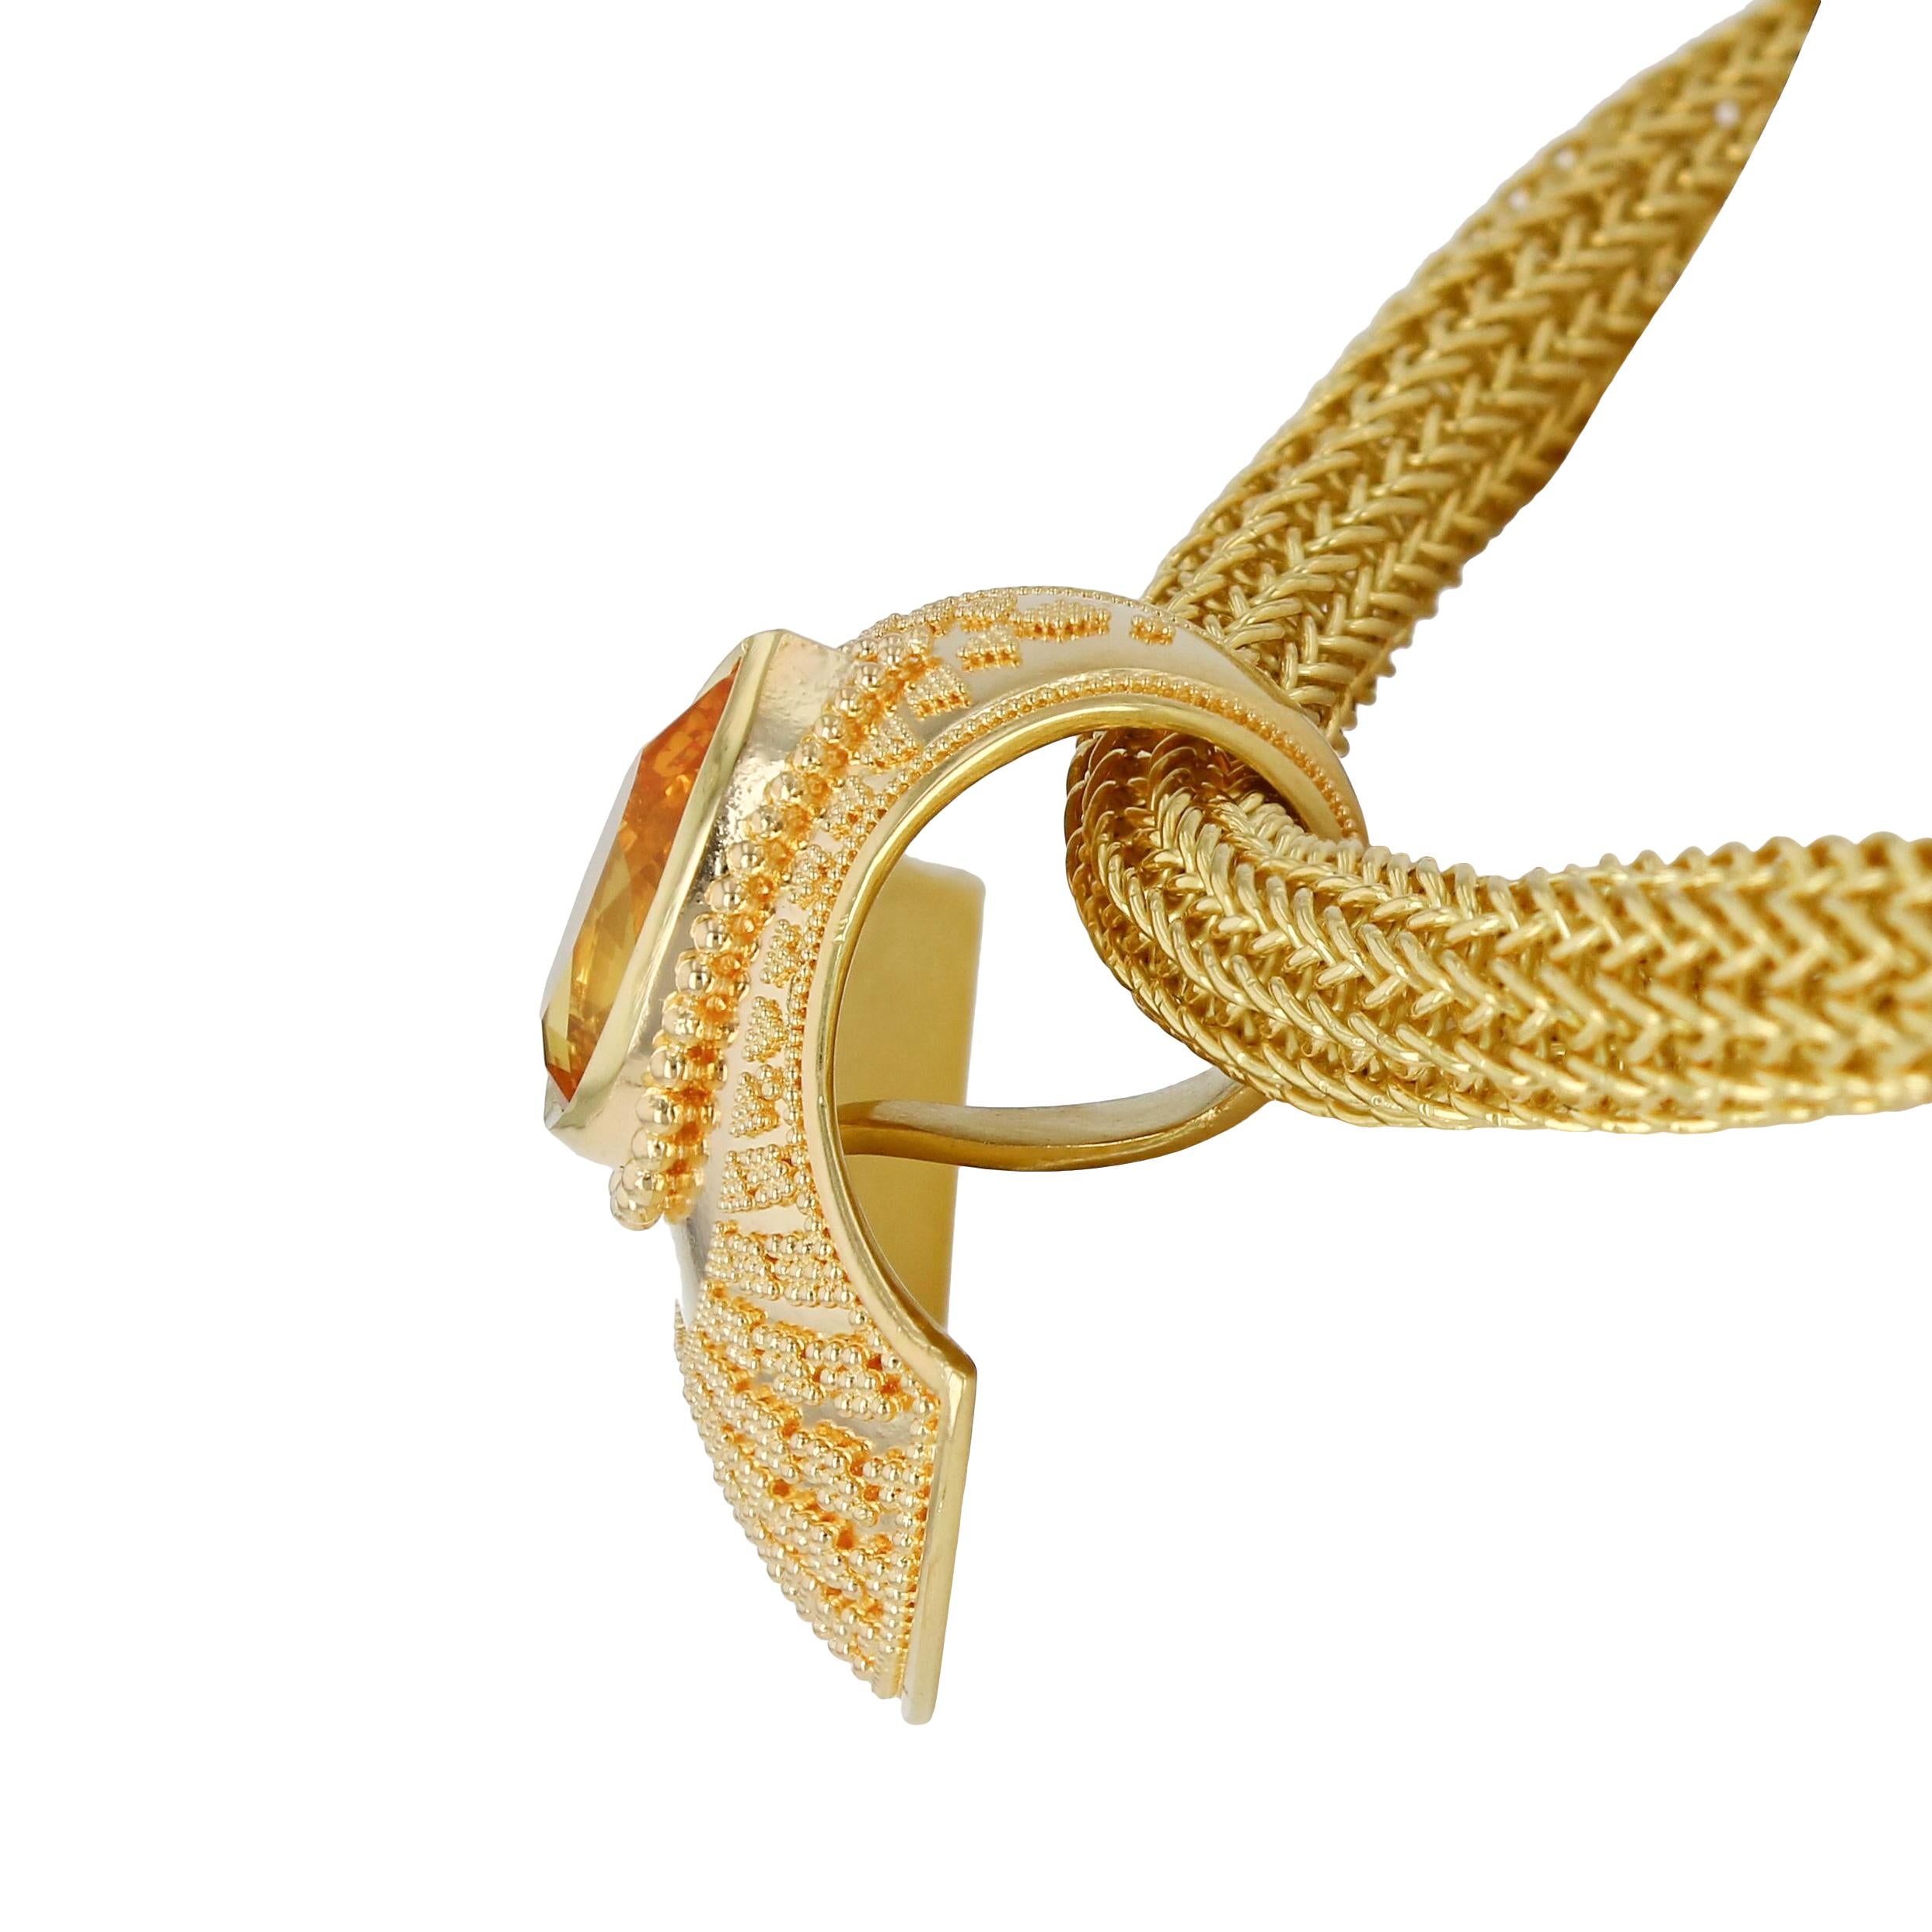 Kent Raible 18 Karat Gold Golden Sapphire Shell Pendant with fine Granulation For Sale 1